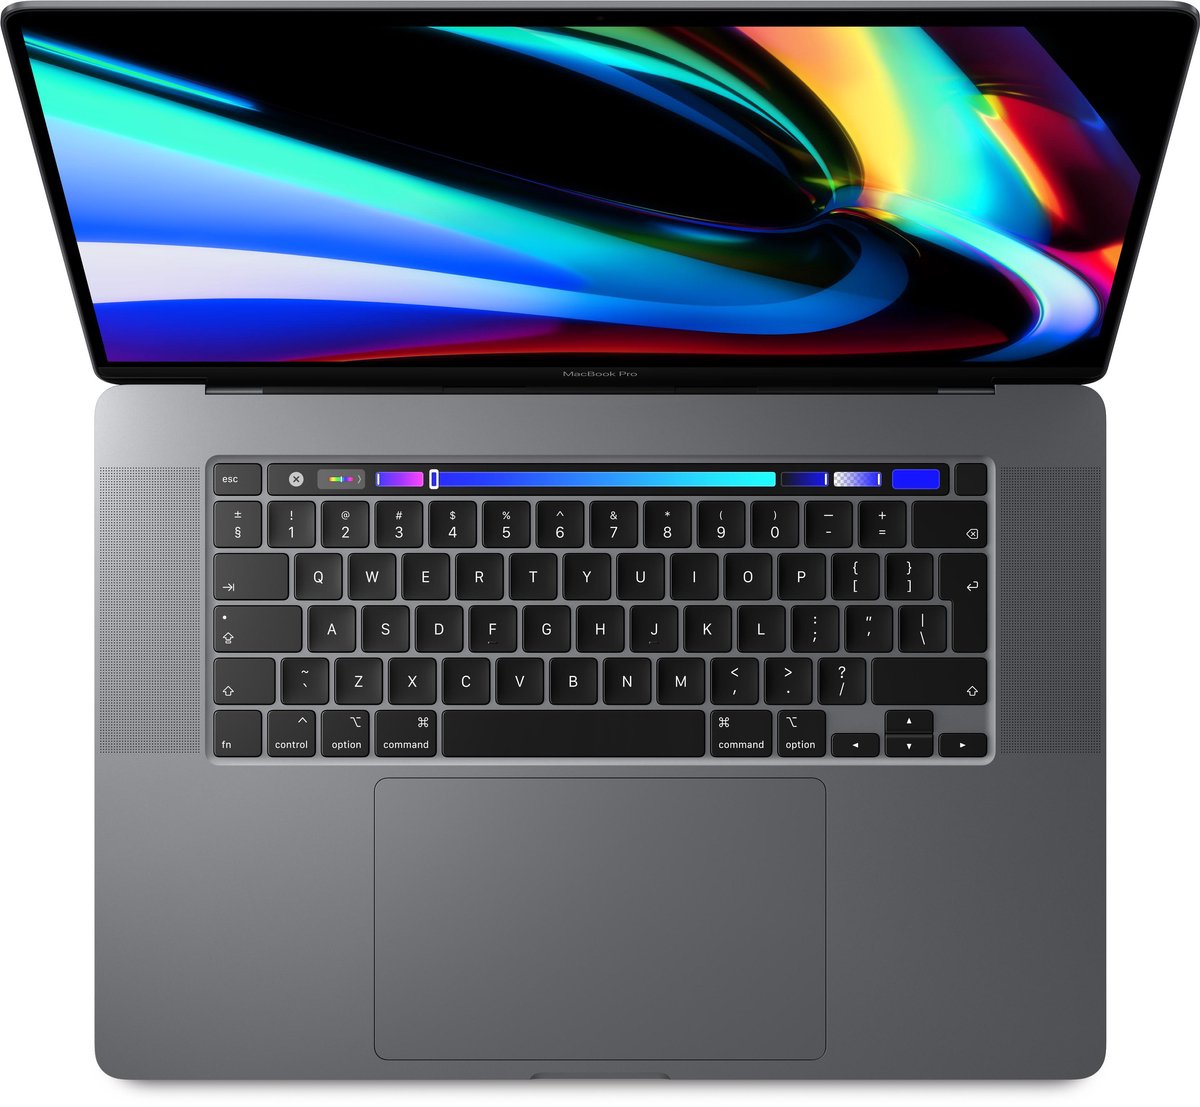 inspanning aftrekken lijst Apple Macbook Pro (2019) MVVJ2FN/A - 16 inch - 512 GB - Spacegrijs - Azerty  | bol.com